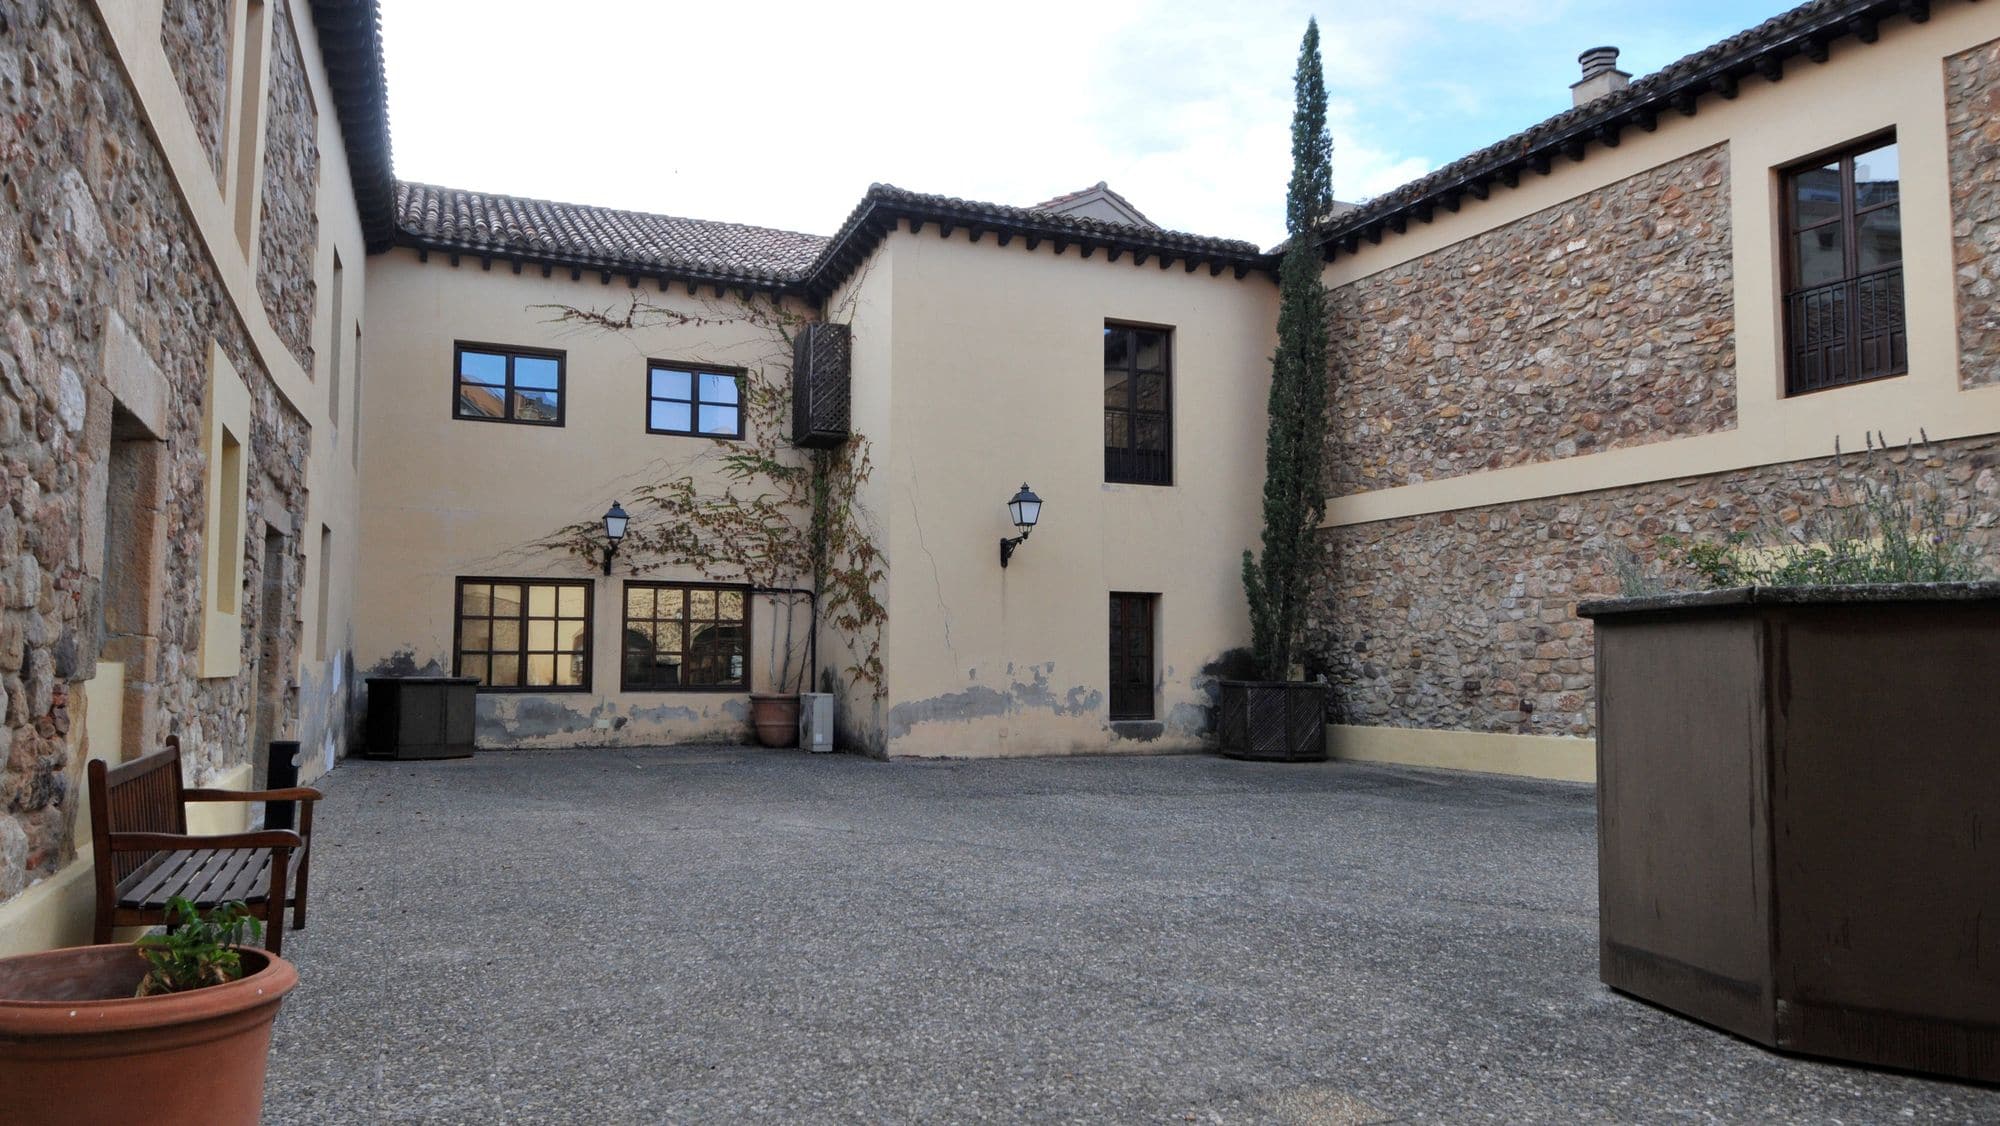 https://funge.uva.es/wp-content/uploads/2020/12/Exterior-Residencia-Duques-de-Soria-Universidad-de-Valladolid.jpg